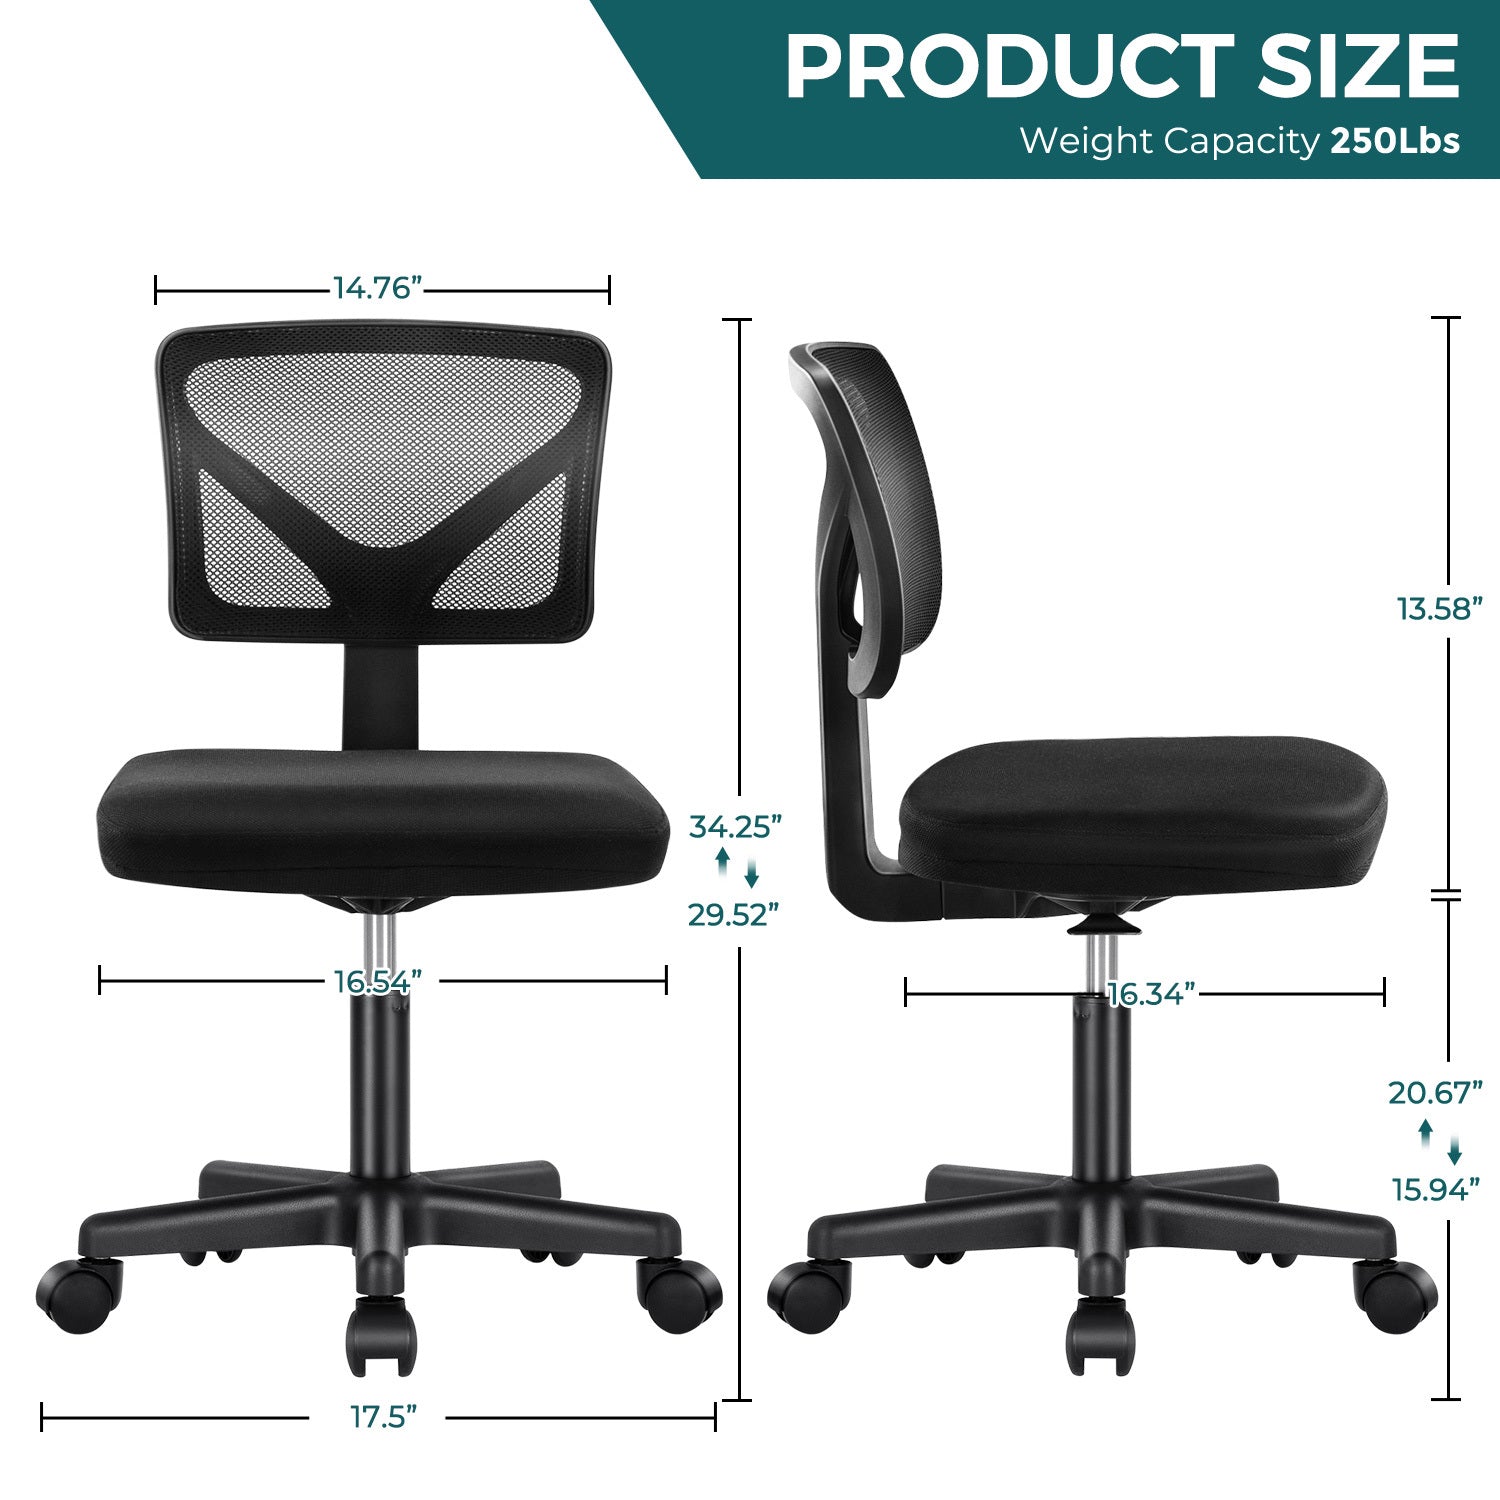 Sweetcrispy Armless Desk Chair Small Home Office Chair black-nylon mesh